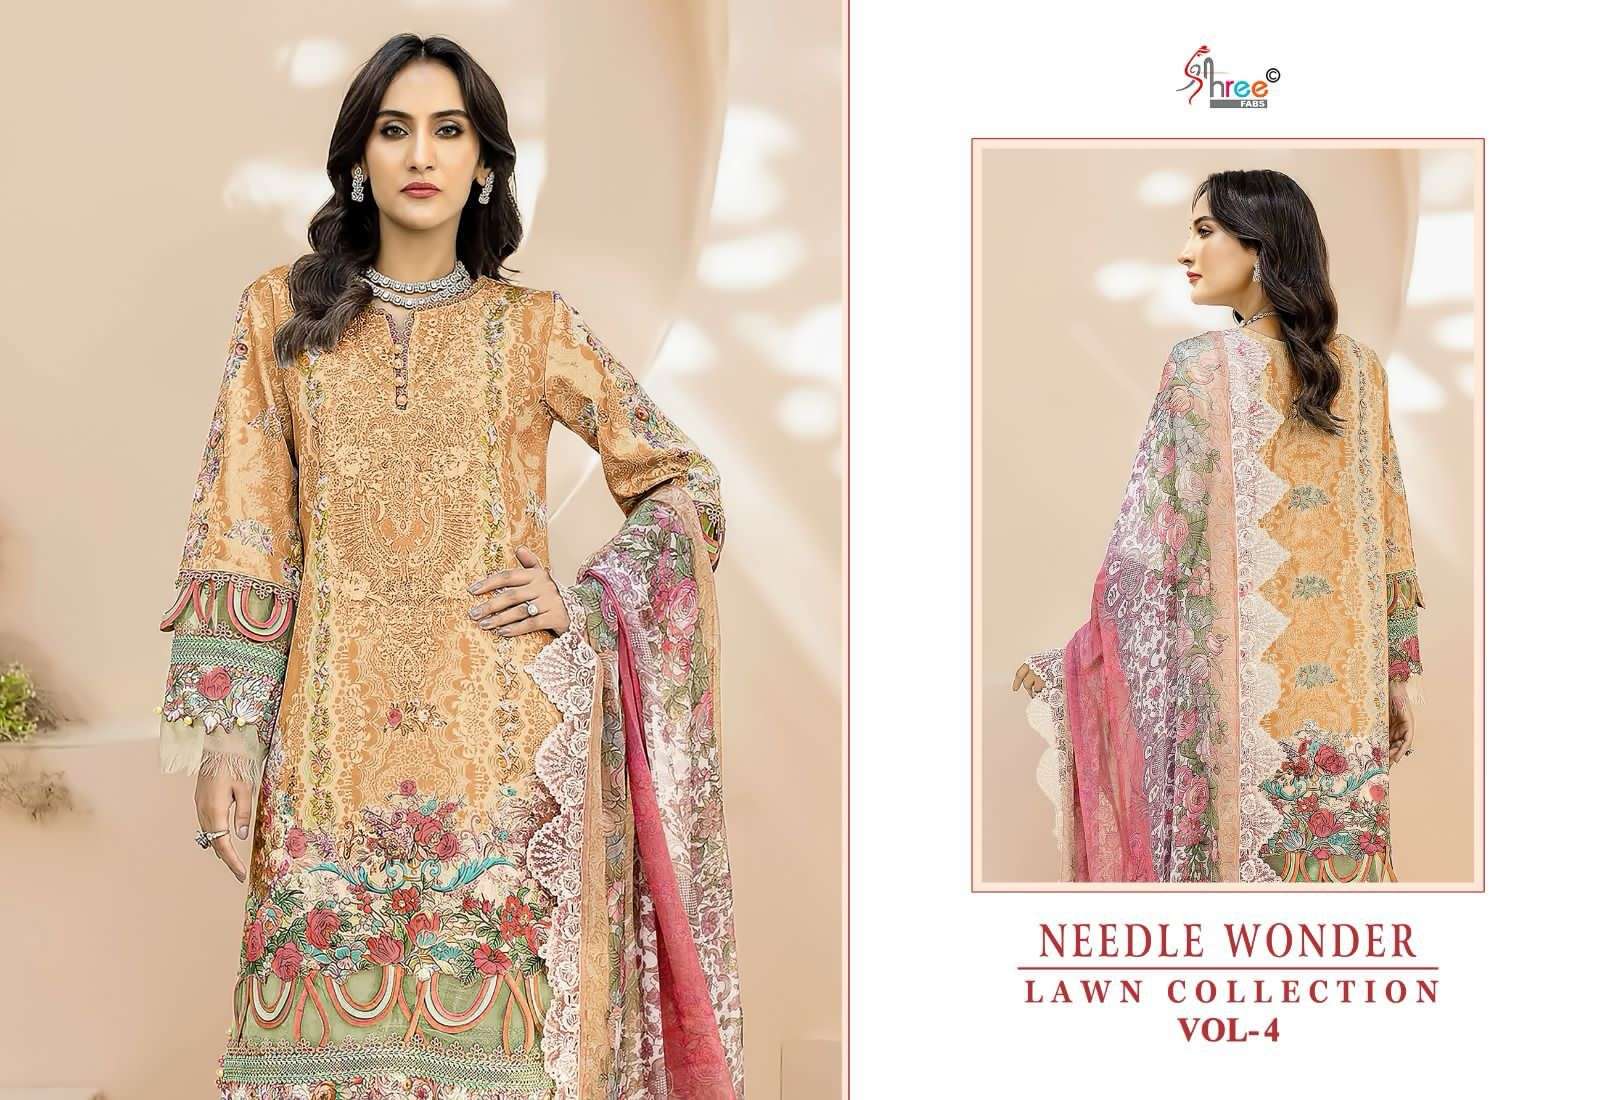 shree fabs lawn collection vol-4 3384-3389 series designer partywear pakistani suit wholesaler surat gujarat